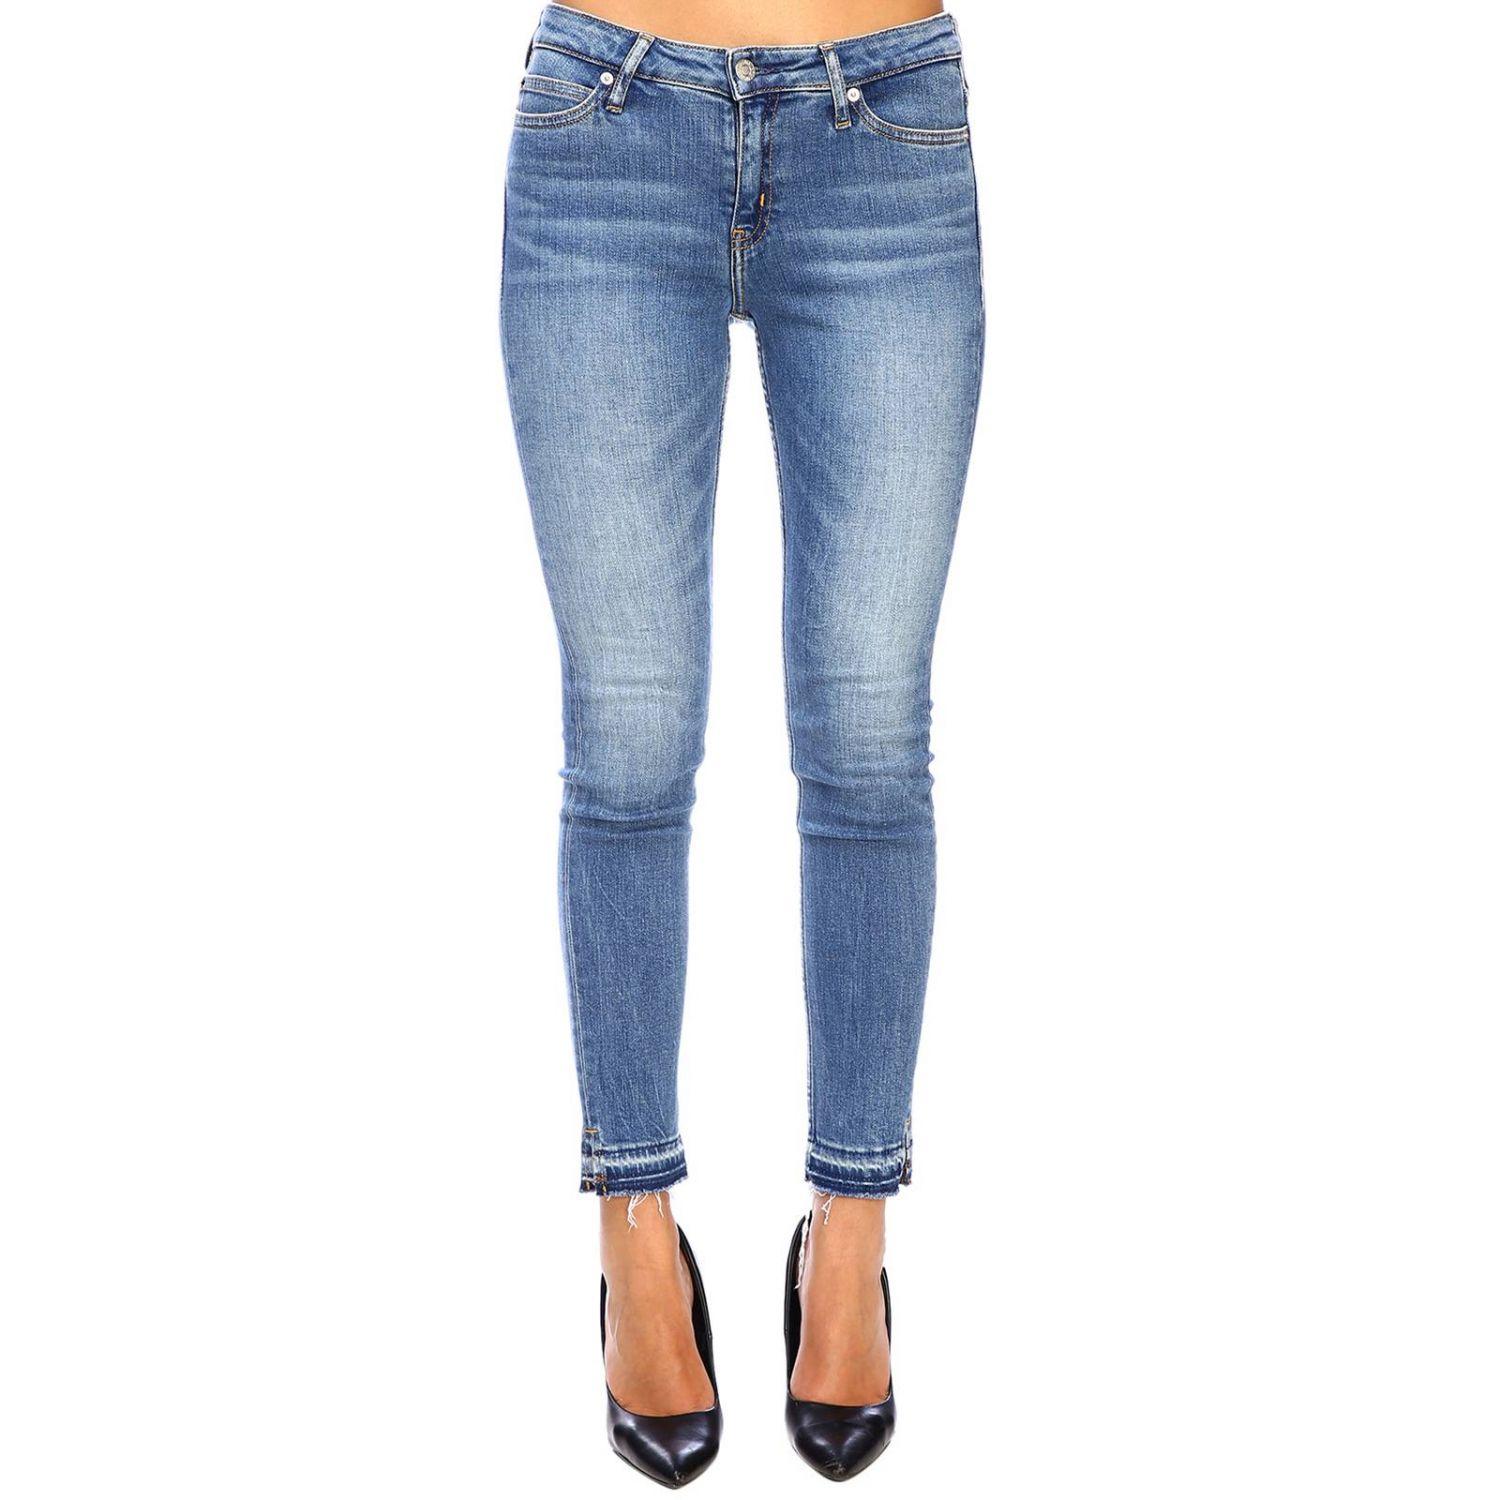 Terms calvin klein jean shorts womens barrington – Latest fashion